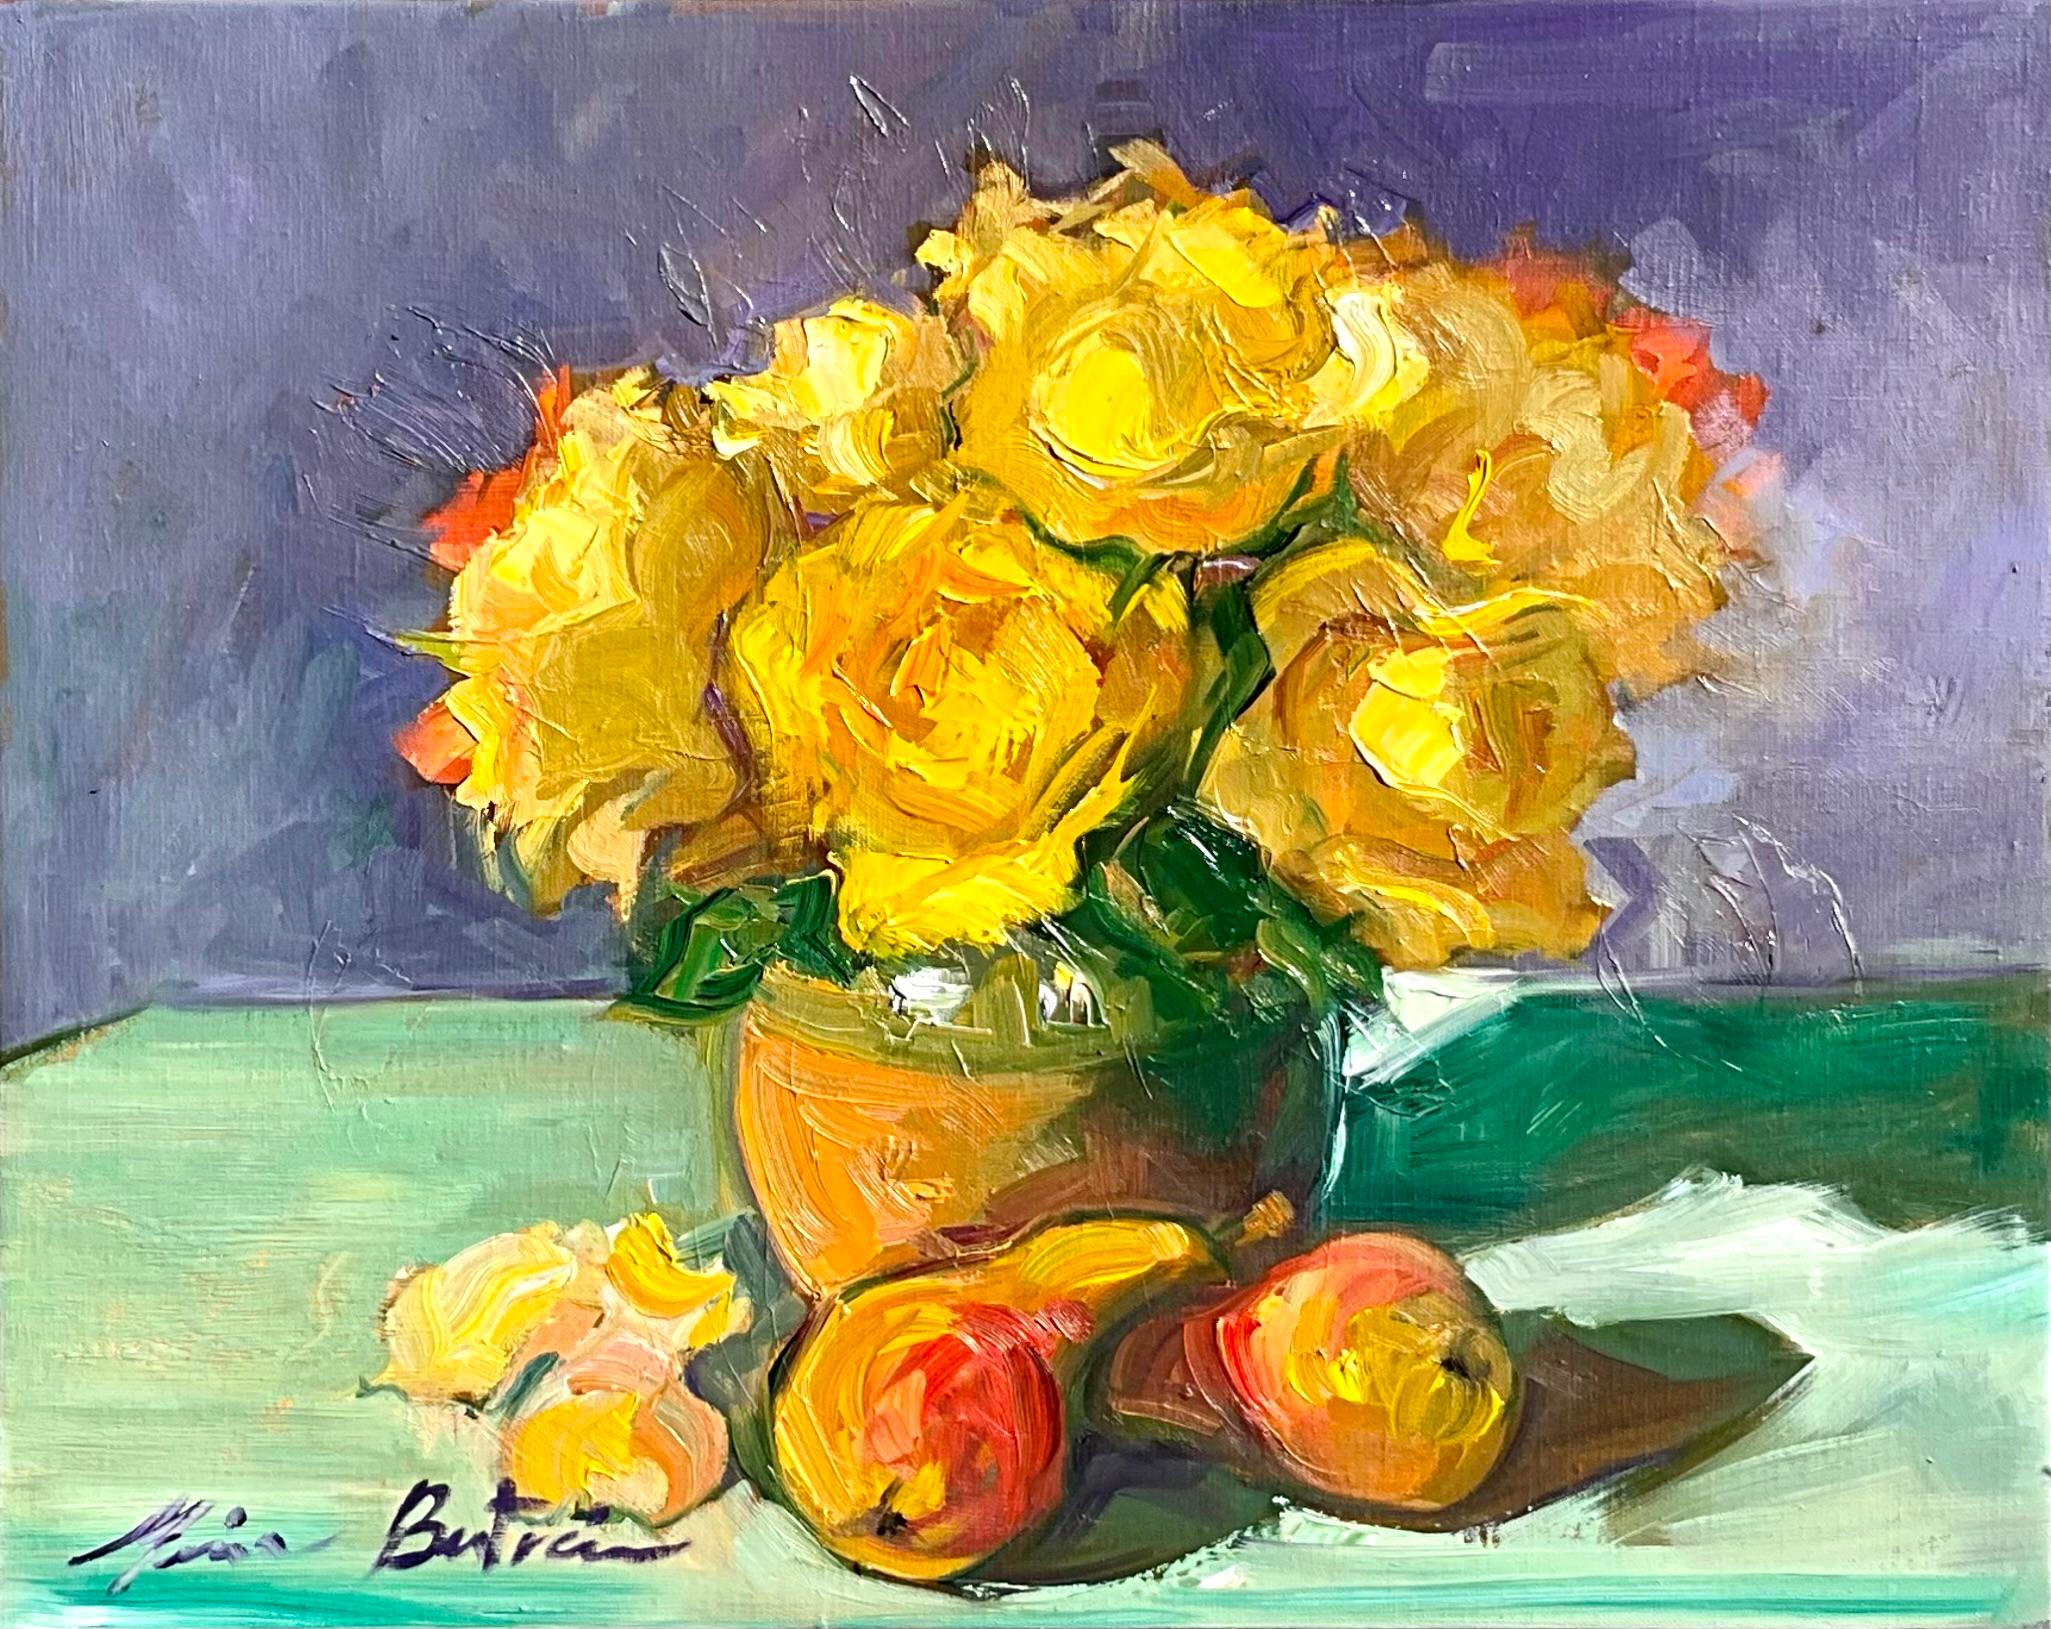 Maria Bertrán Still-Life Painting - "Yellow Roses" Contemporary Impressionist Still Life Oil